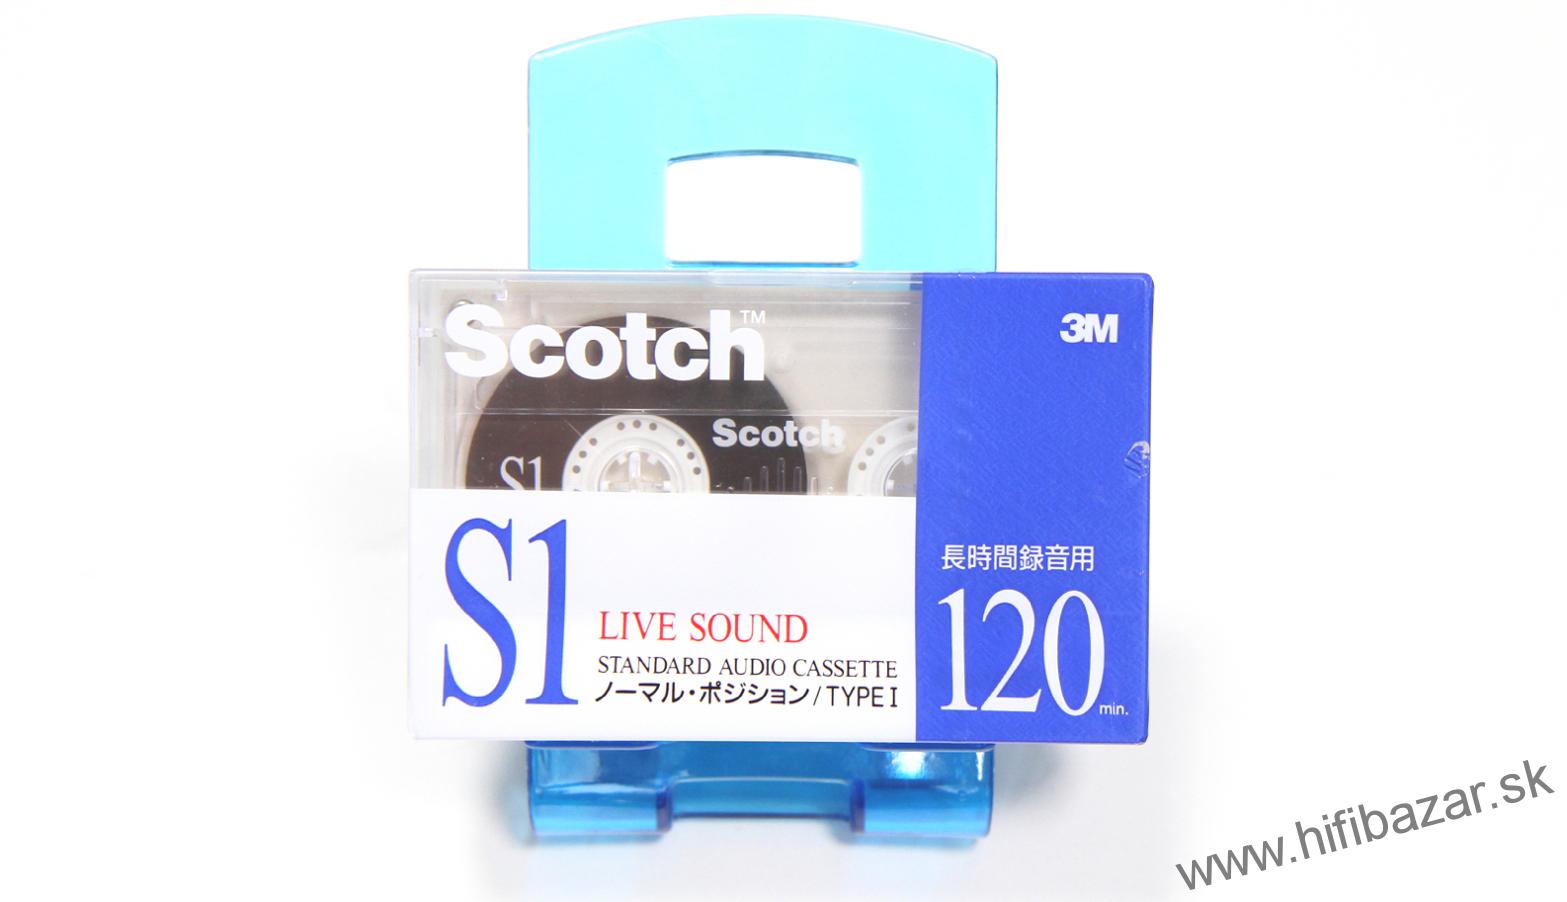 SCOTCH S1-120 Japan